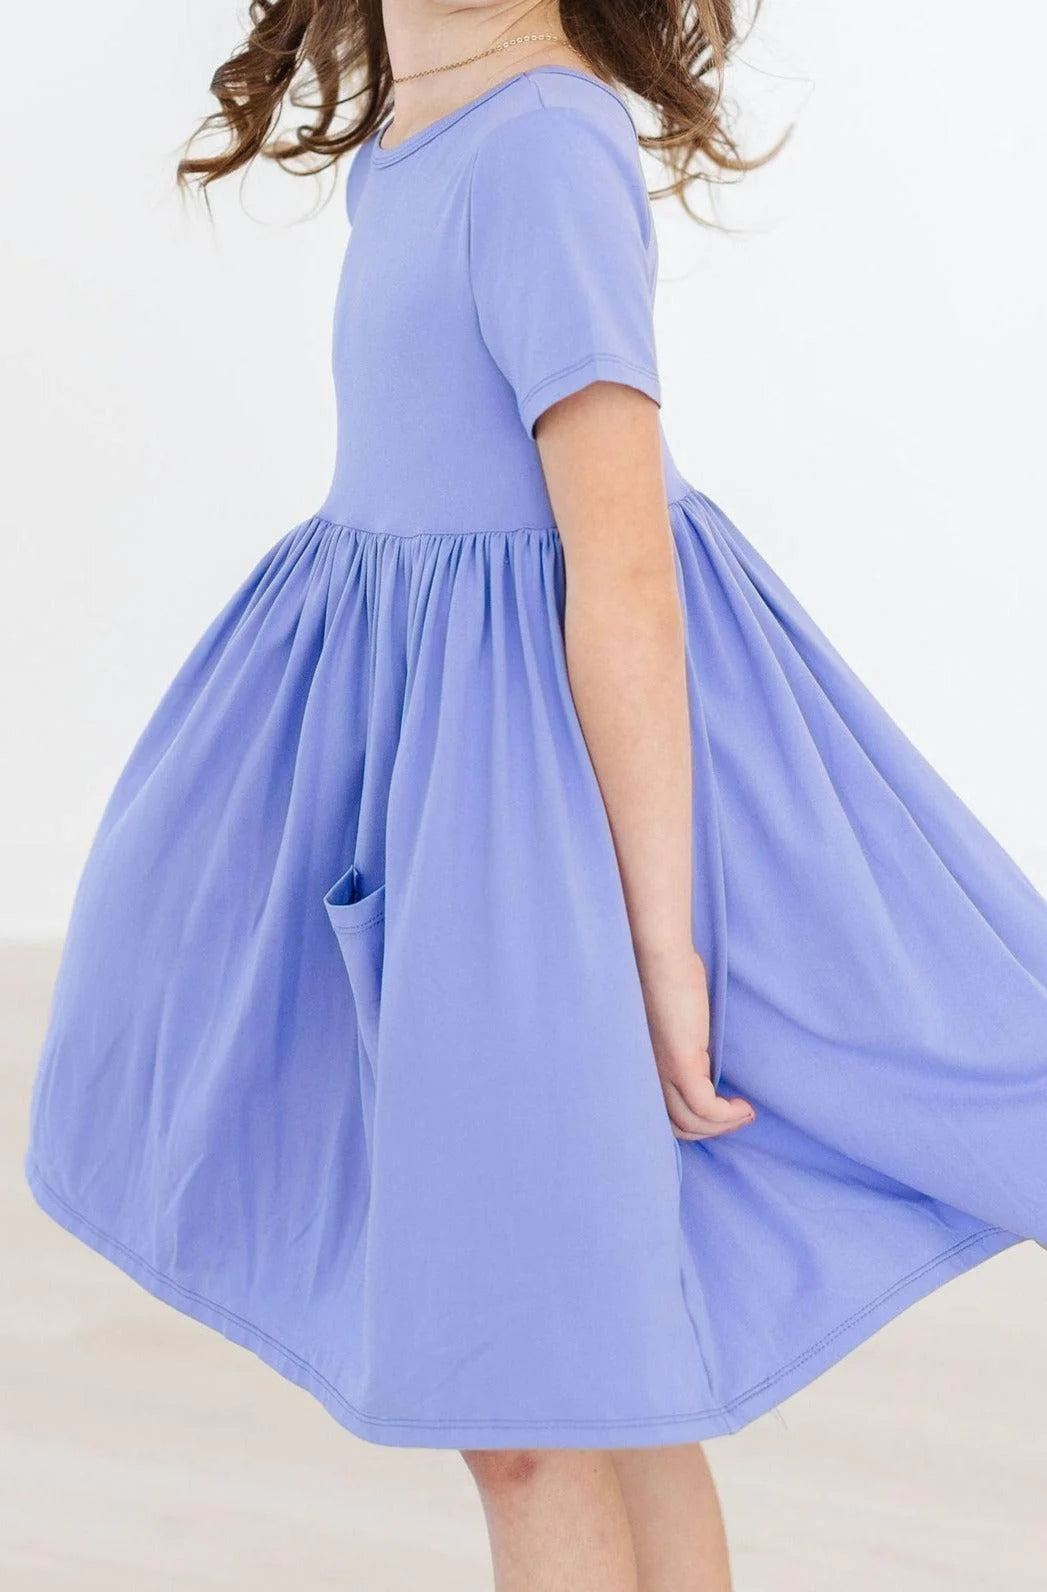 Periwinkle 3/4 Sleeve Pocket Twirl Dress by Mila & Rose